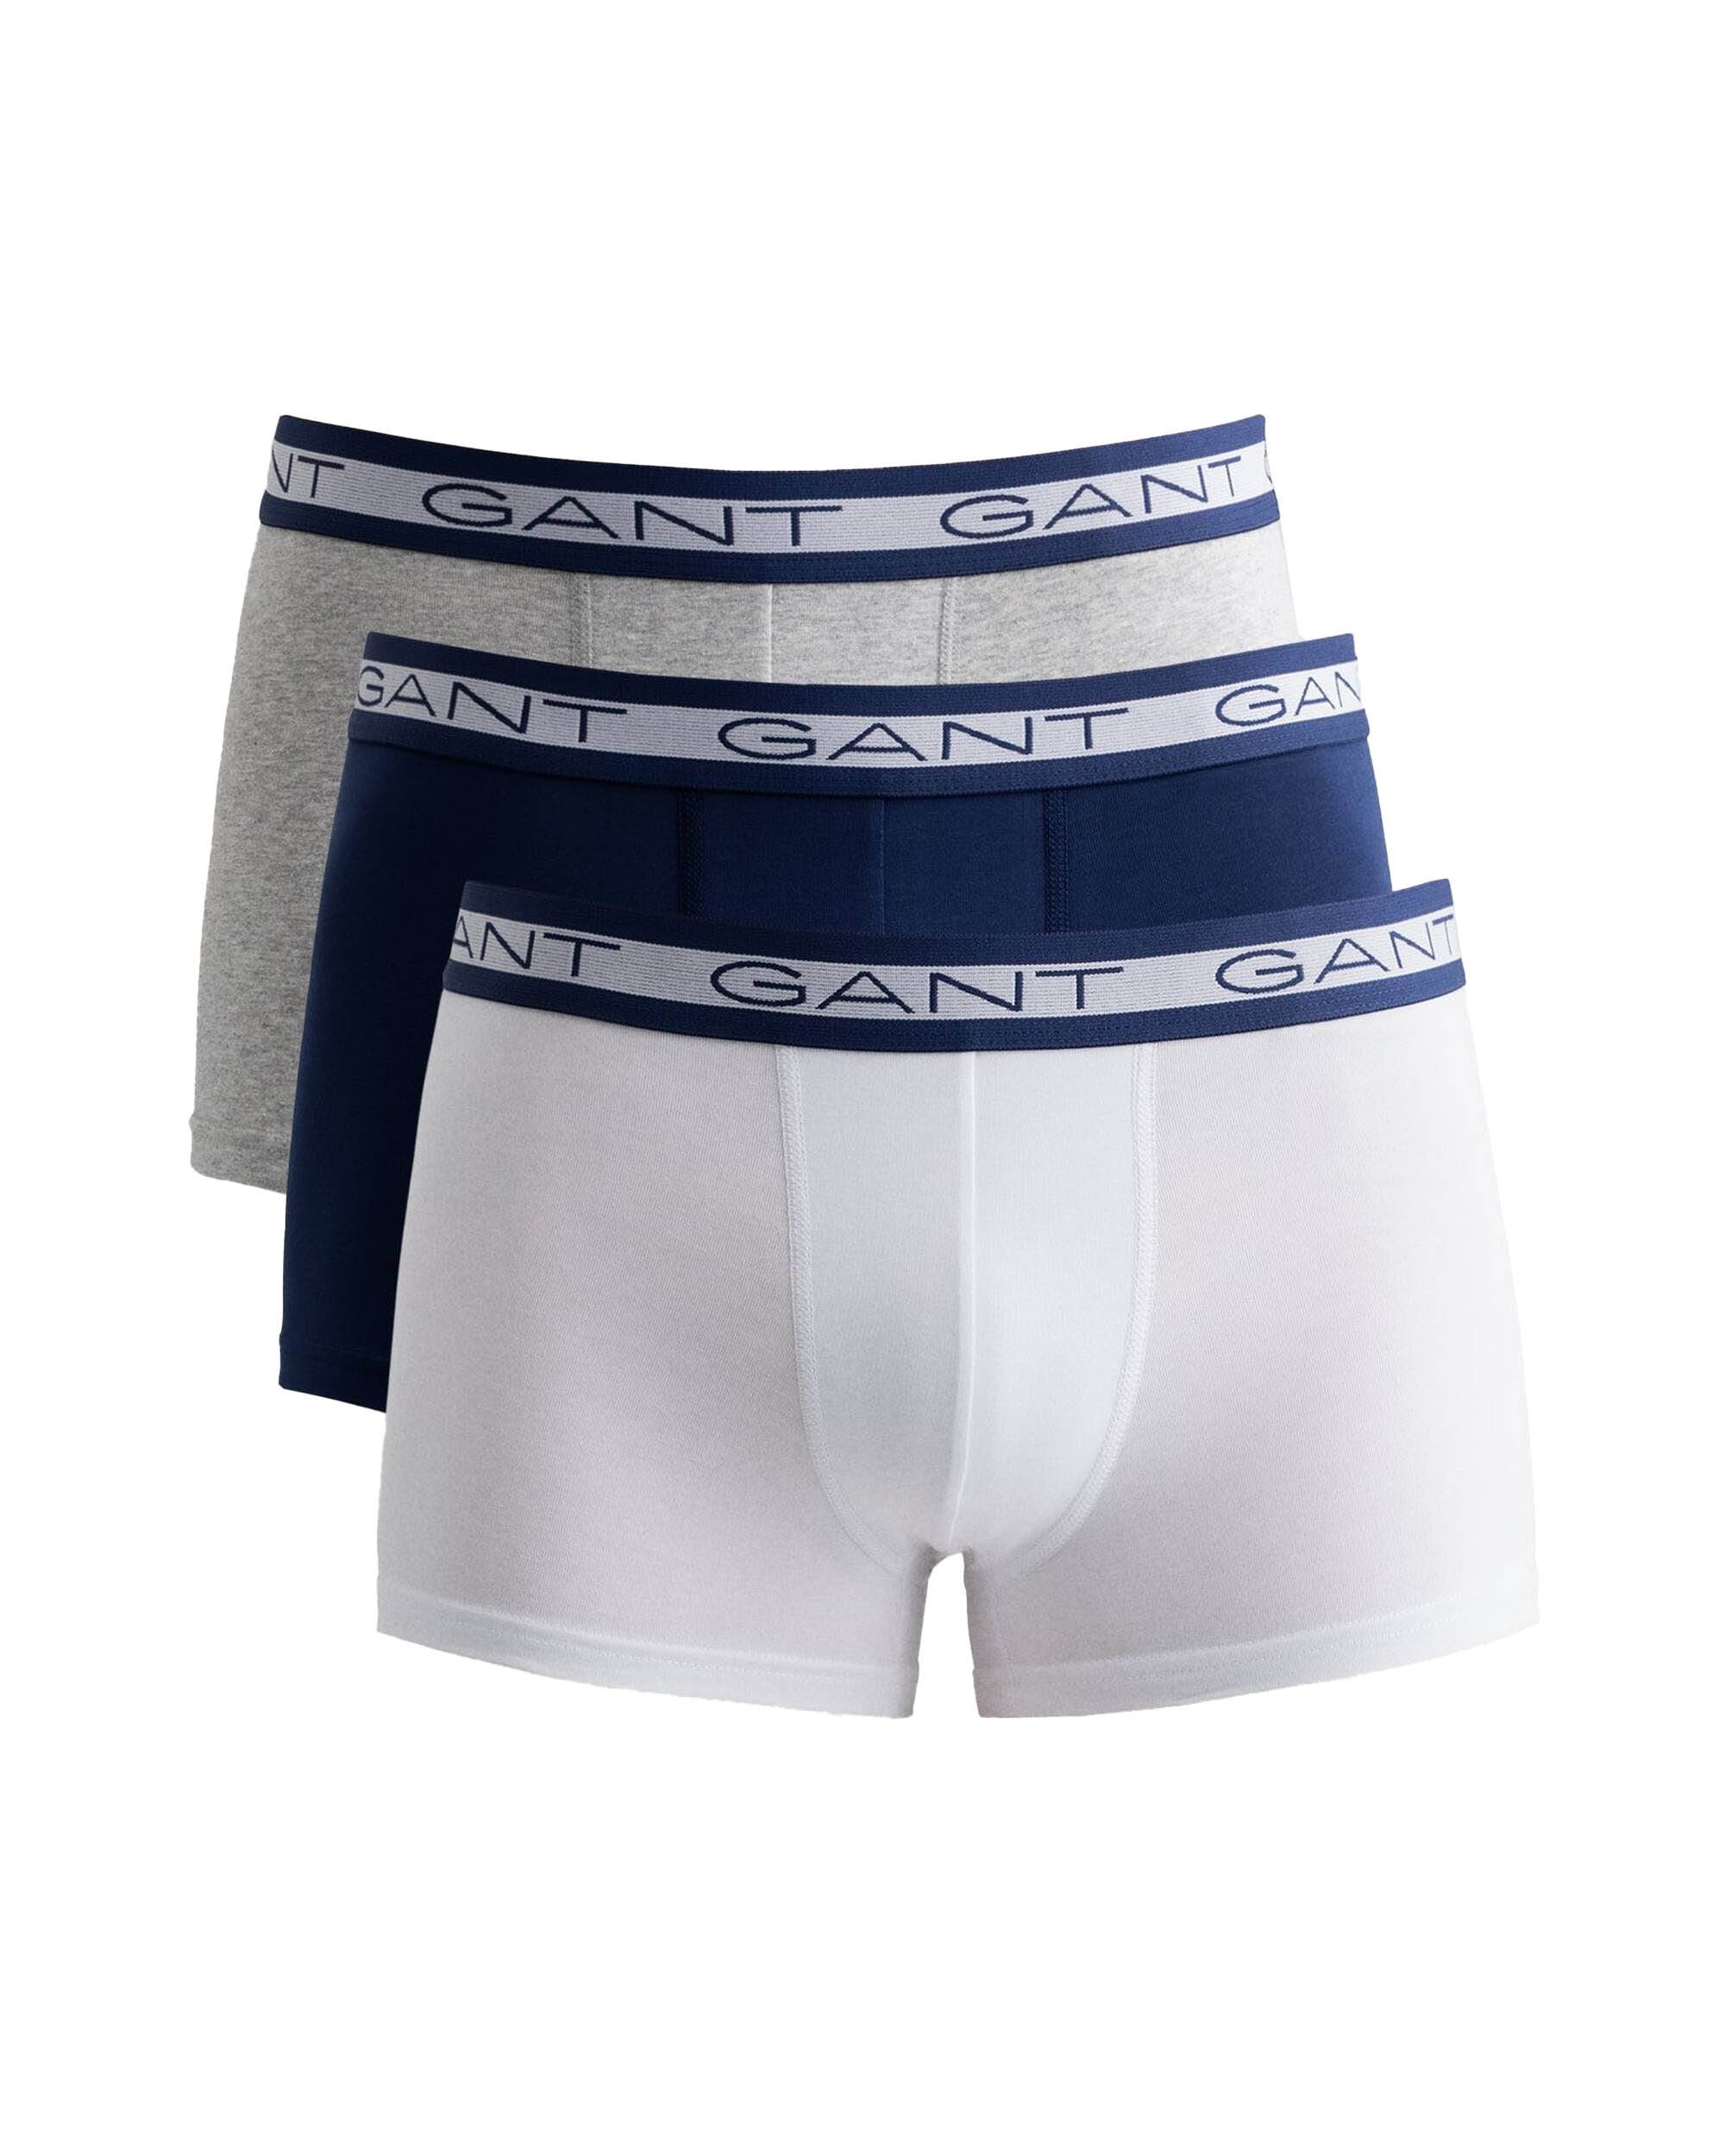 Gant Boxer Herren Boxer Shorts, 3er Pack - Trunks, Cotton Weiß/Blau/Grau | Boxershorts